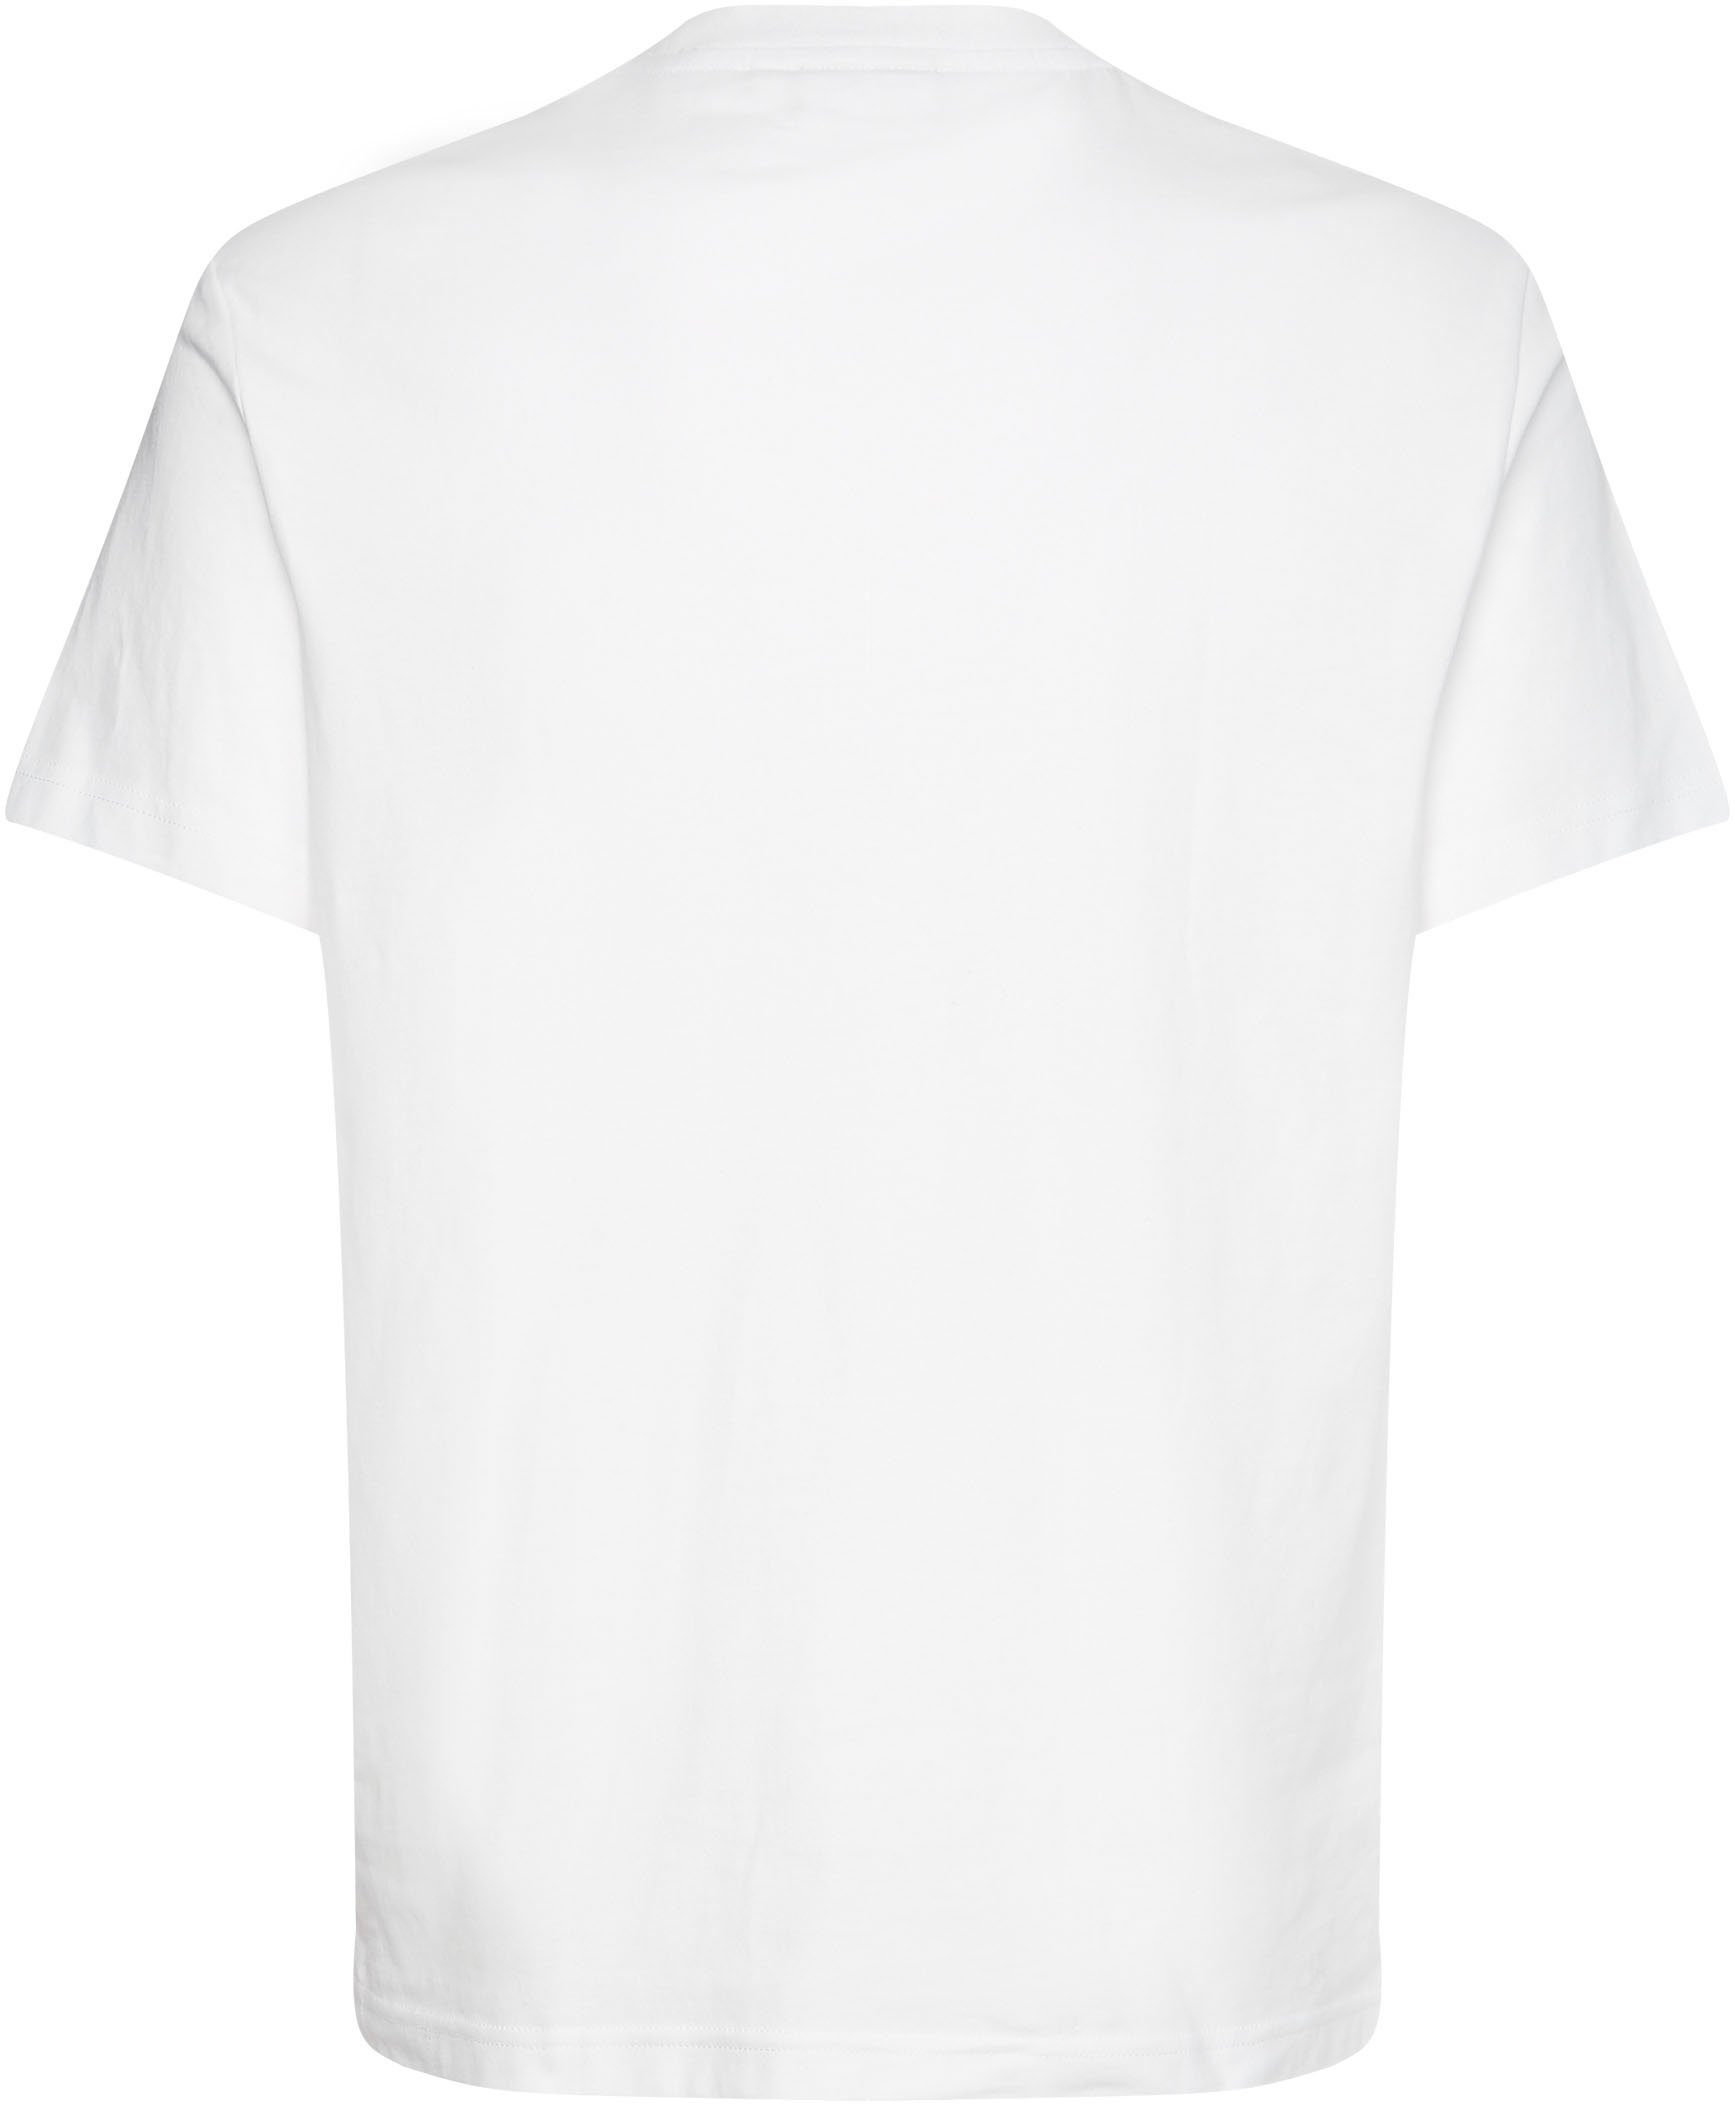 Klein white LOGO Calvin BOX bright T-SHIRT T-Shirt GRAPHIC